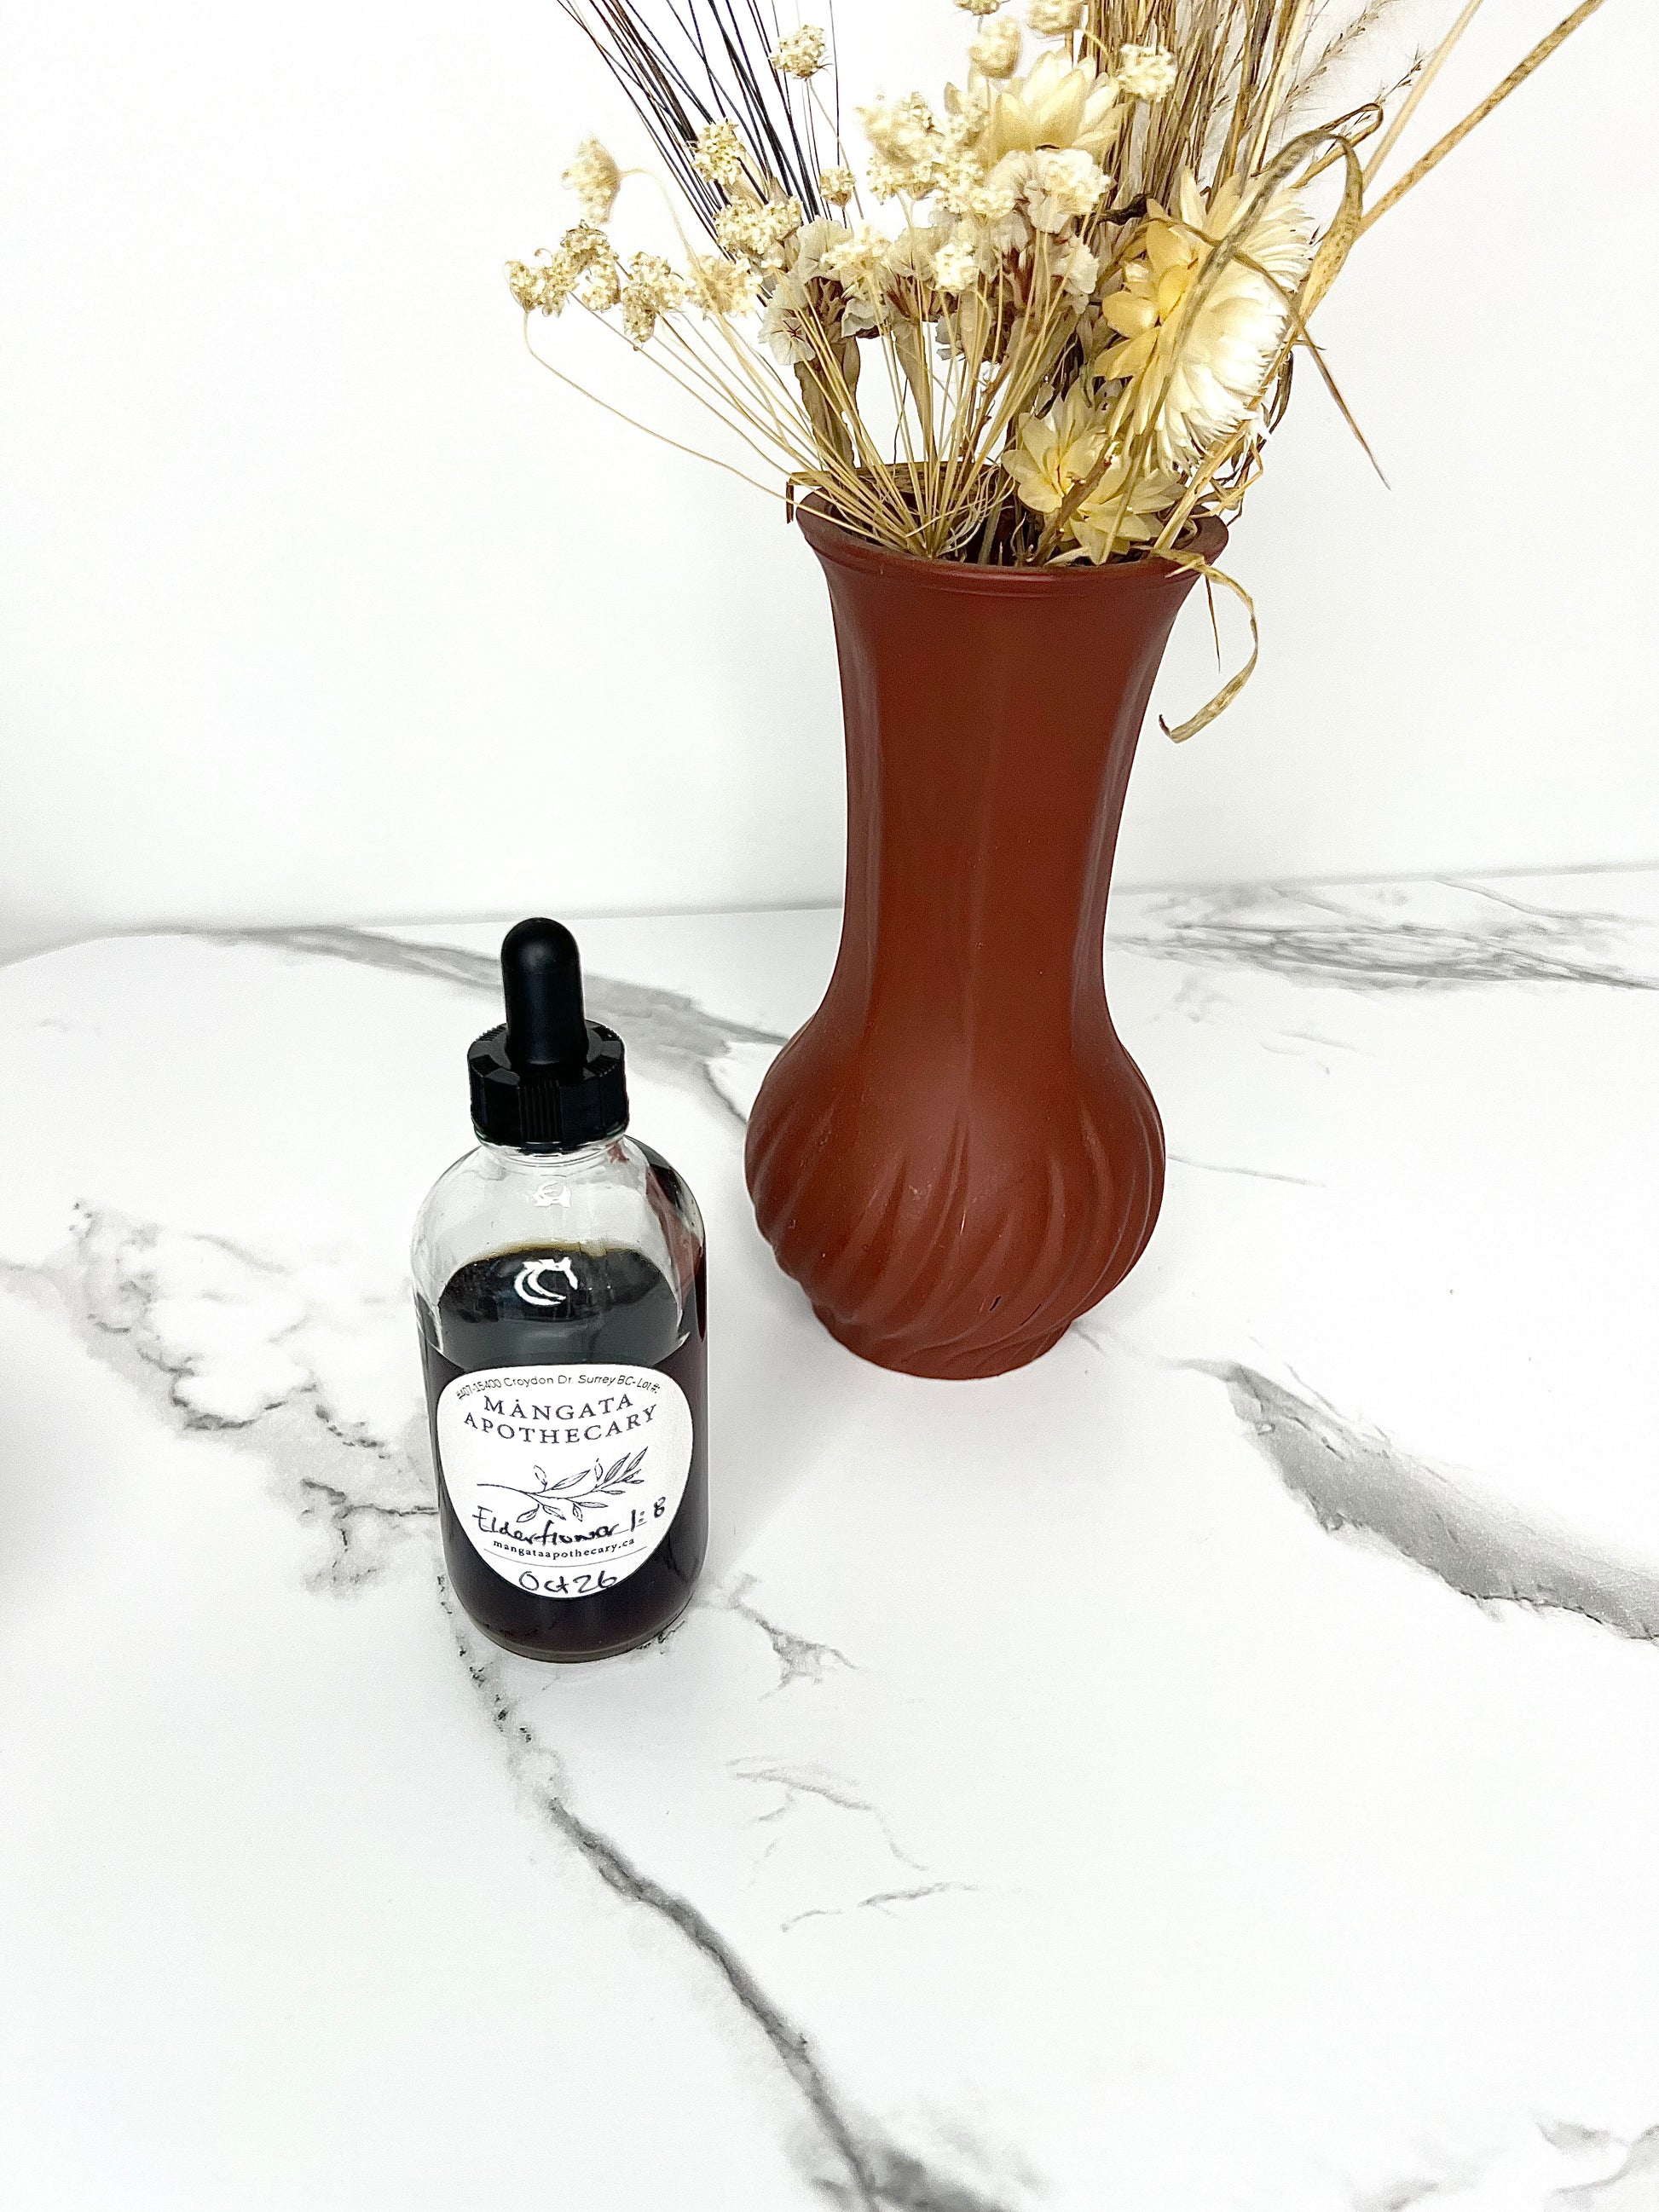 Elderflower Tincture - Product Image For Mangata Dispensary